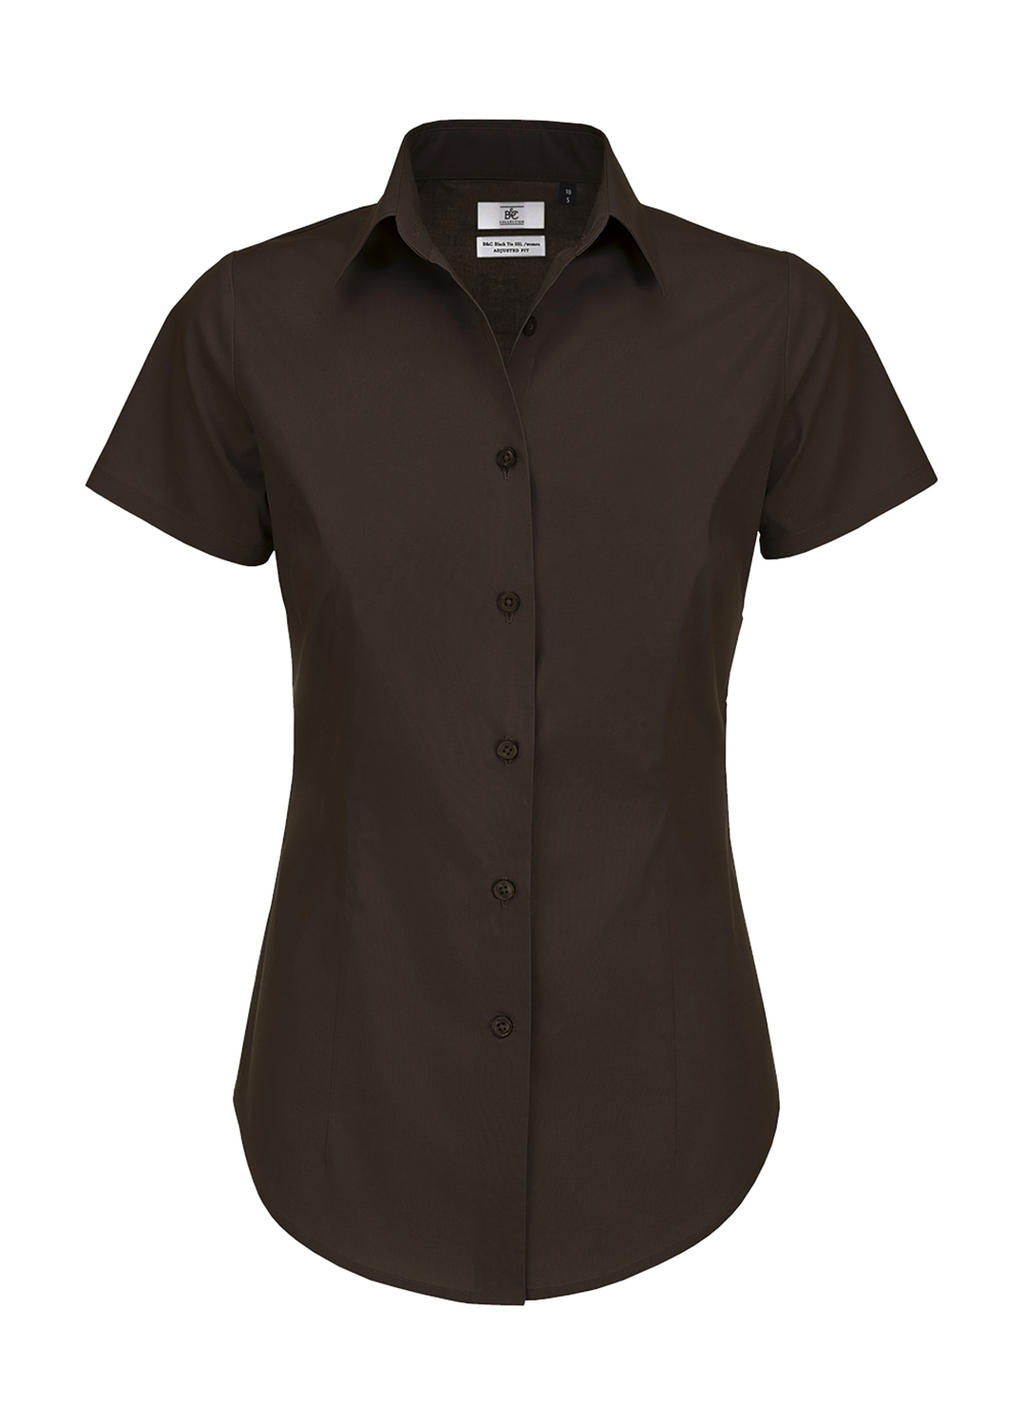  Black Tie SSL/women Poplin Shirt  in Farbe Coffee Bean